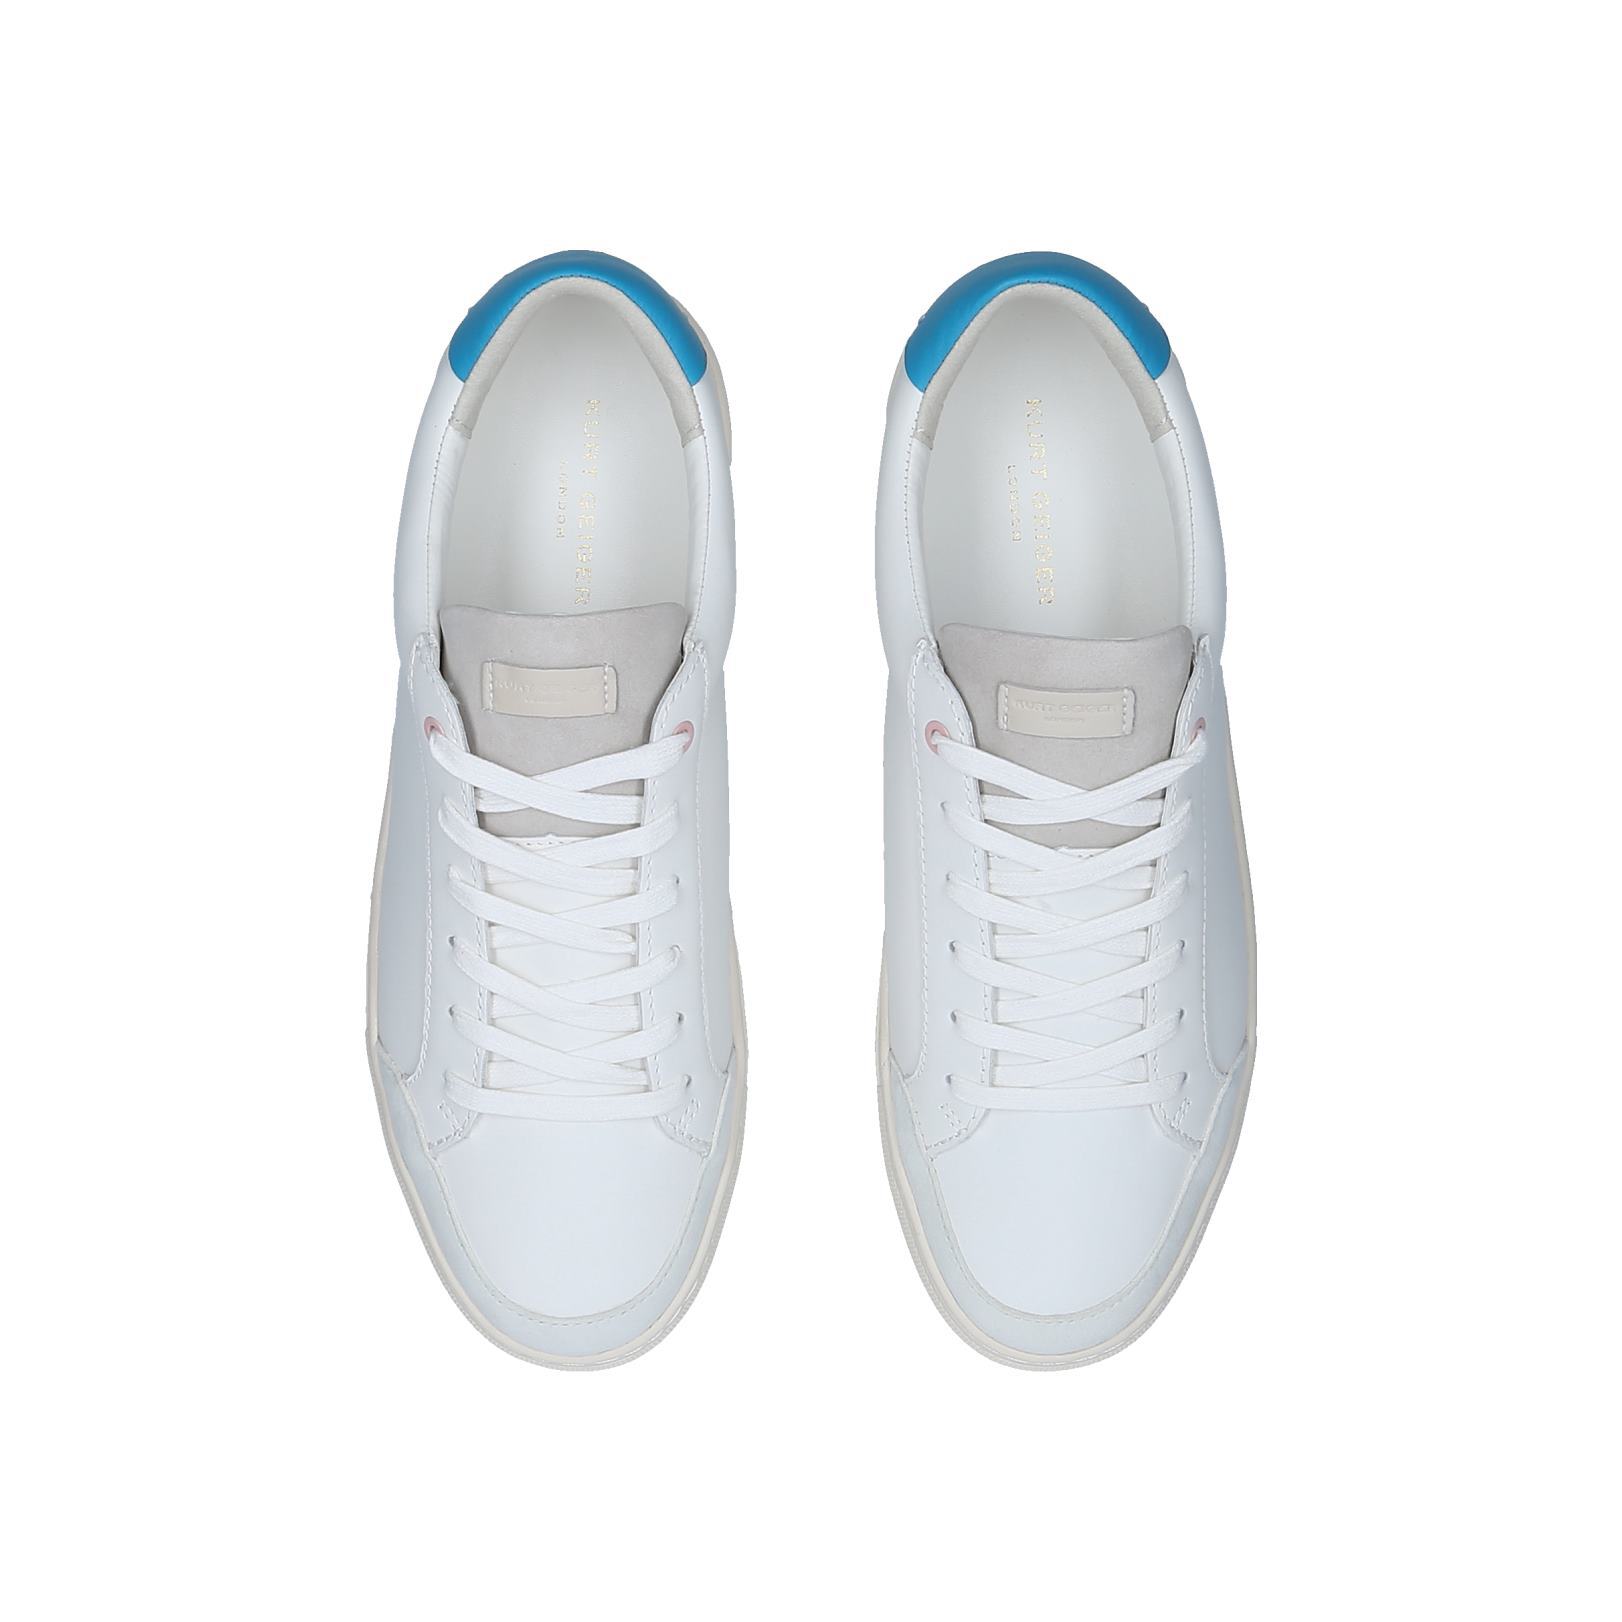 LANE POP MENS White Leather Low Top Sneakers by KURT GEIGER LONDON